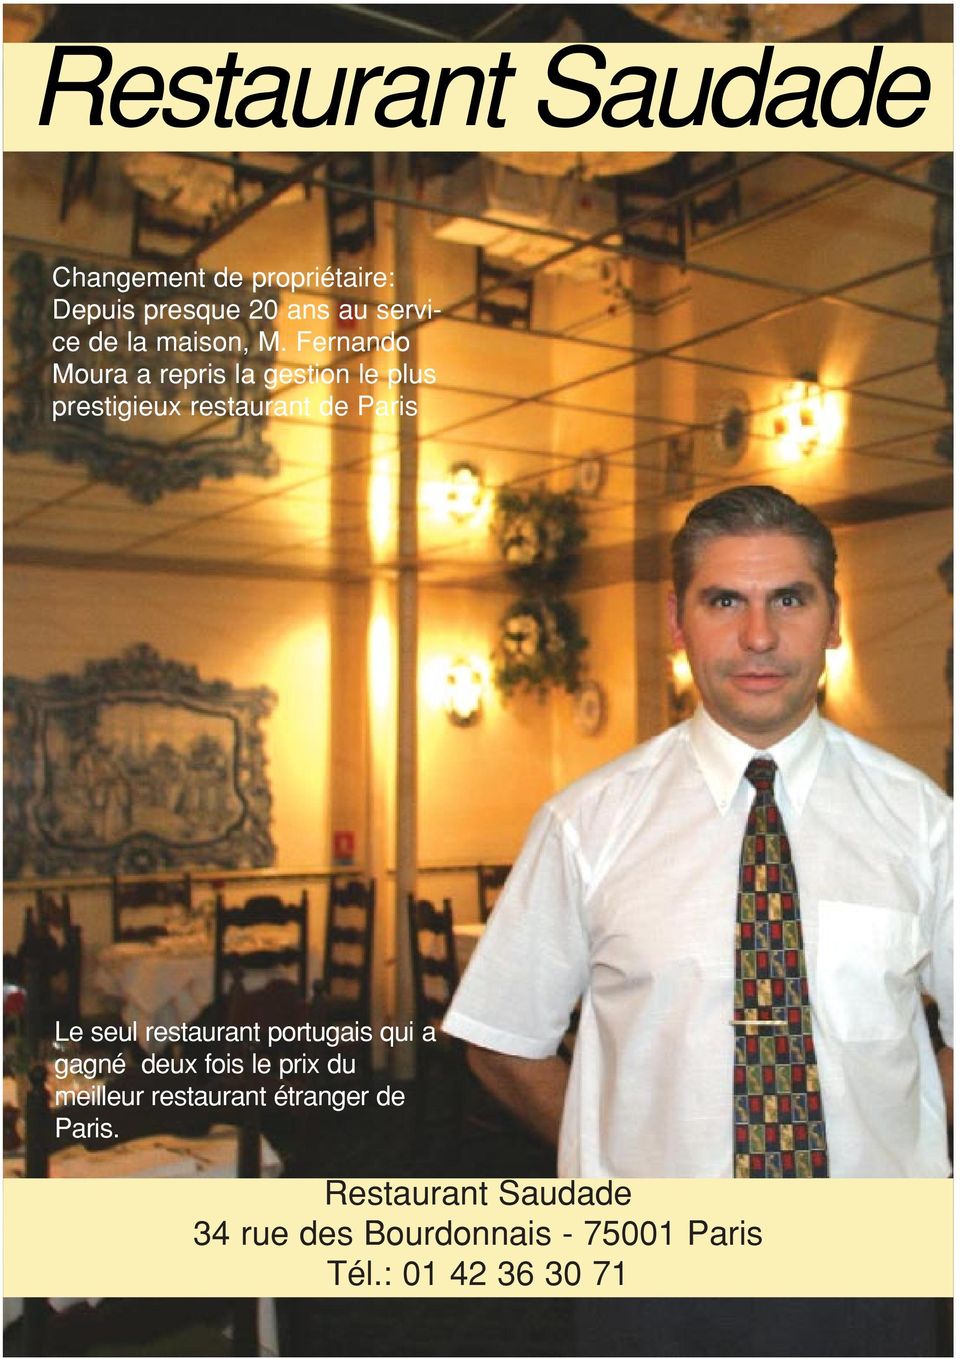 Fernando oura a repris la gestion le plus prestigieux restaurant de aris e seul